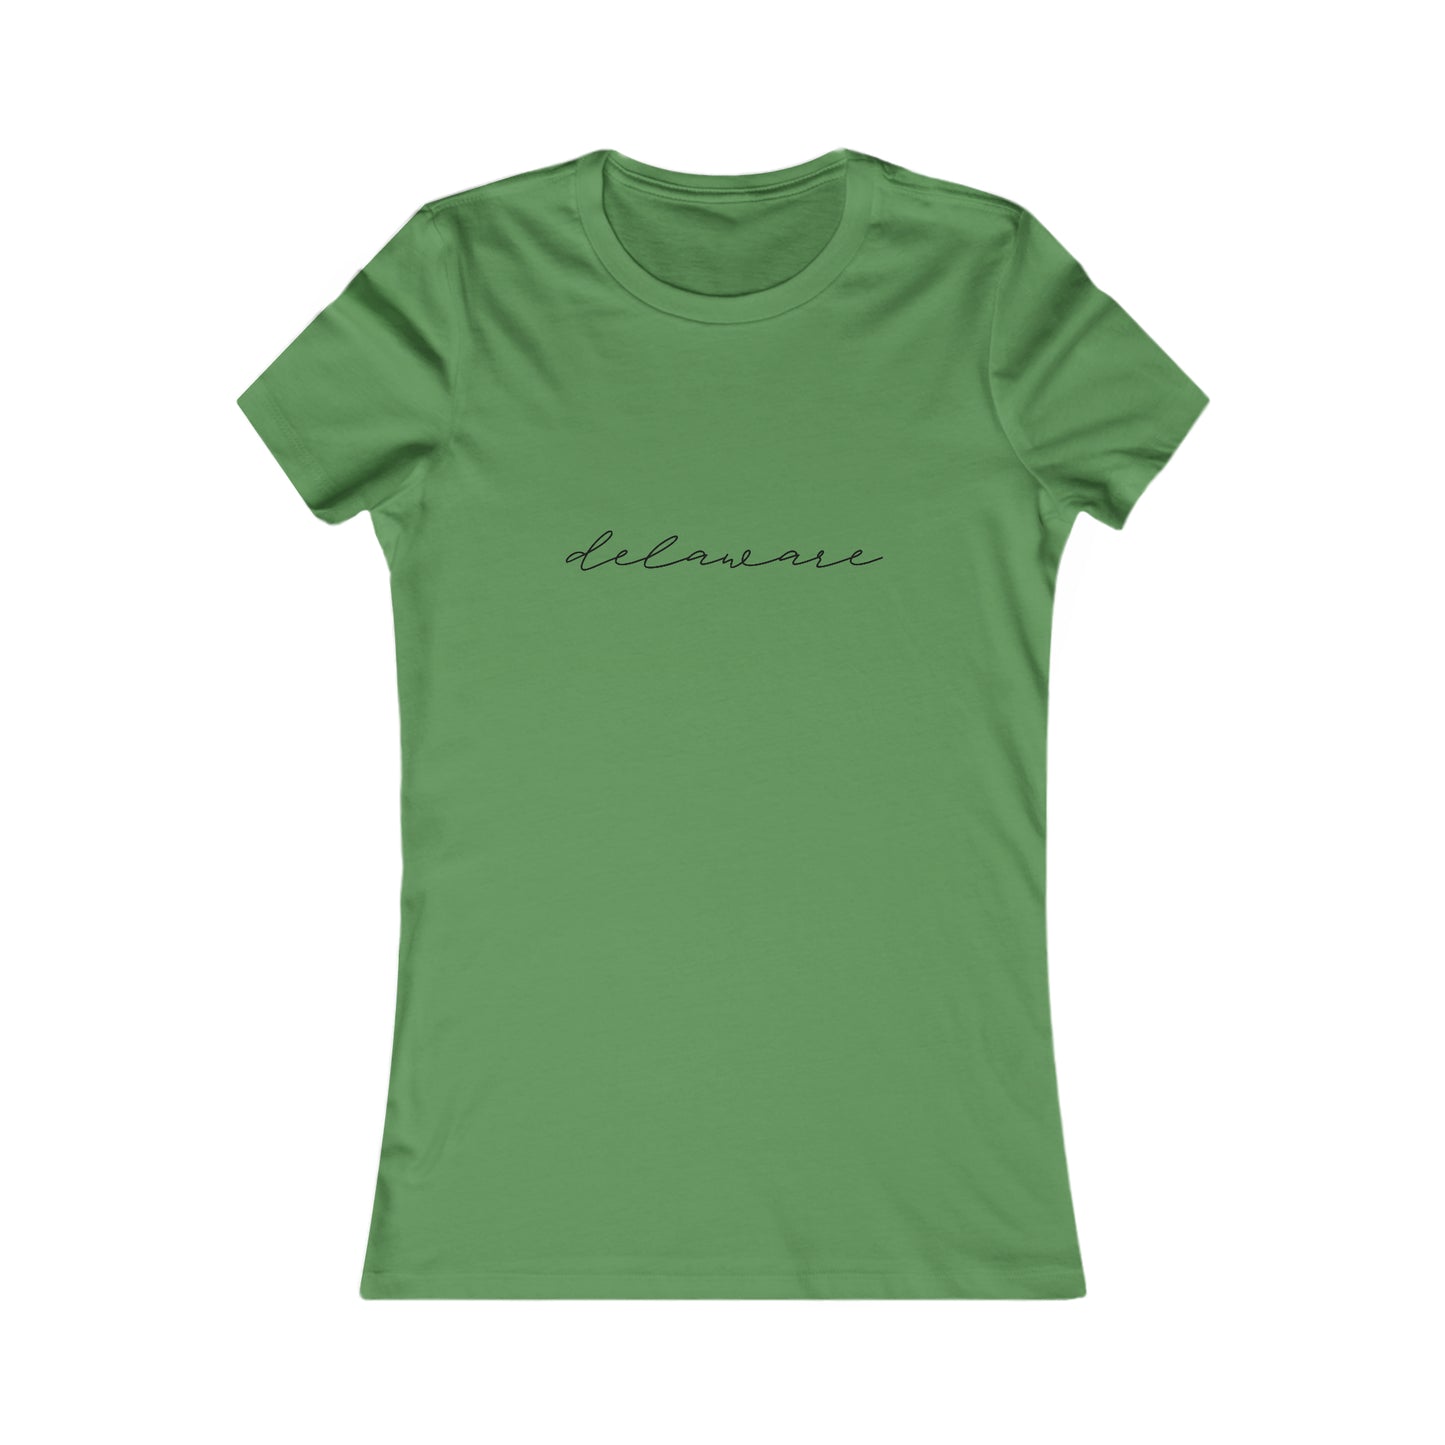 Delaware Cursive Women's Shirt